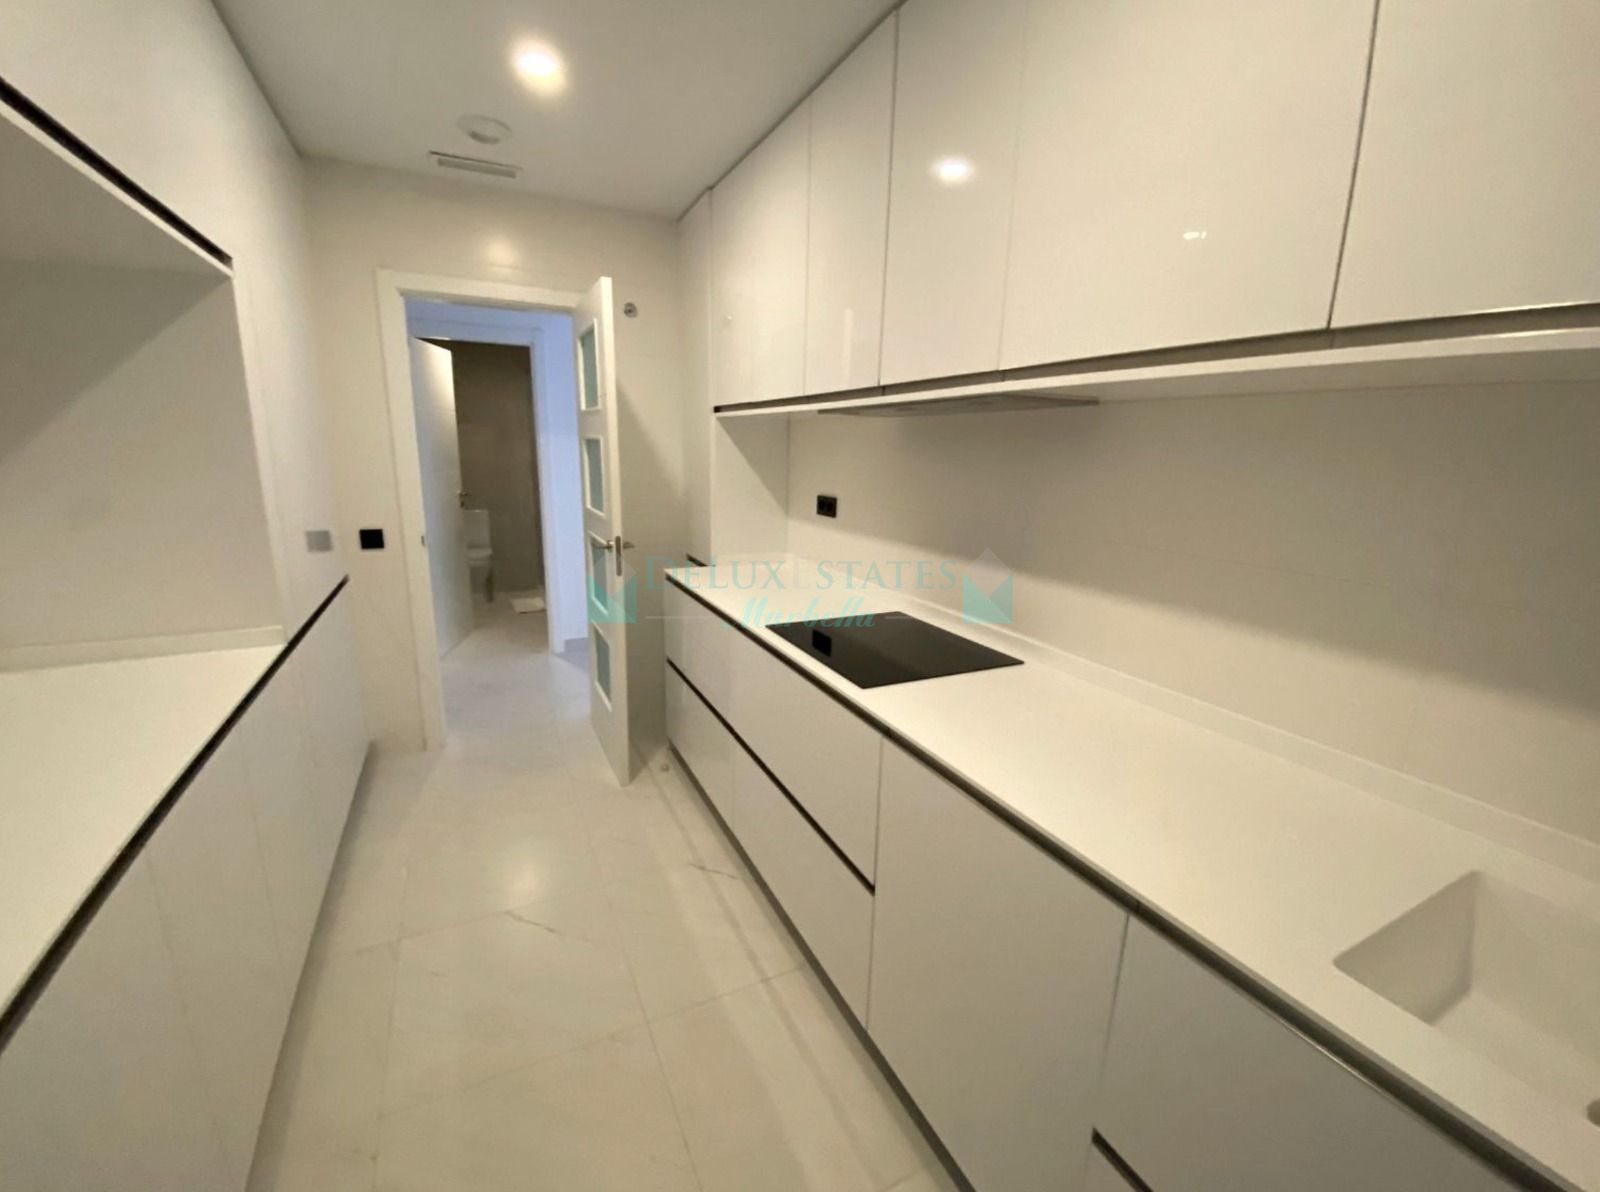 Ground Floor Apartment for rent in Mirador de Estepona Hills, Estepona